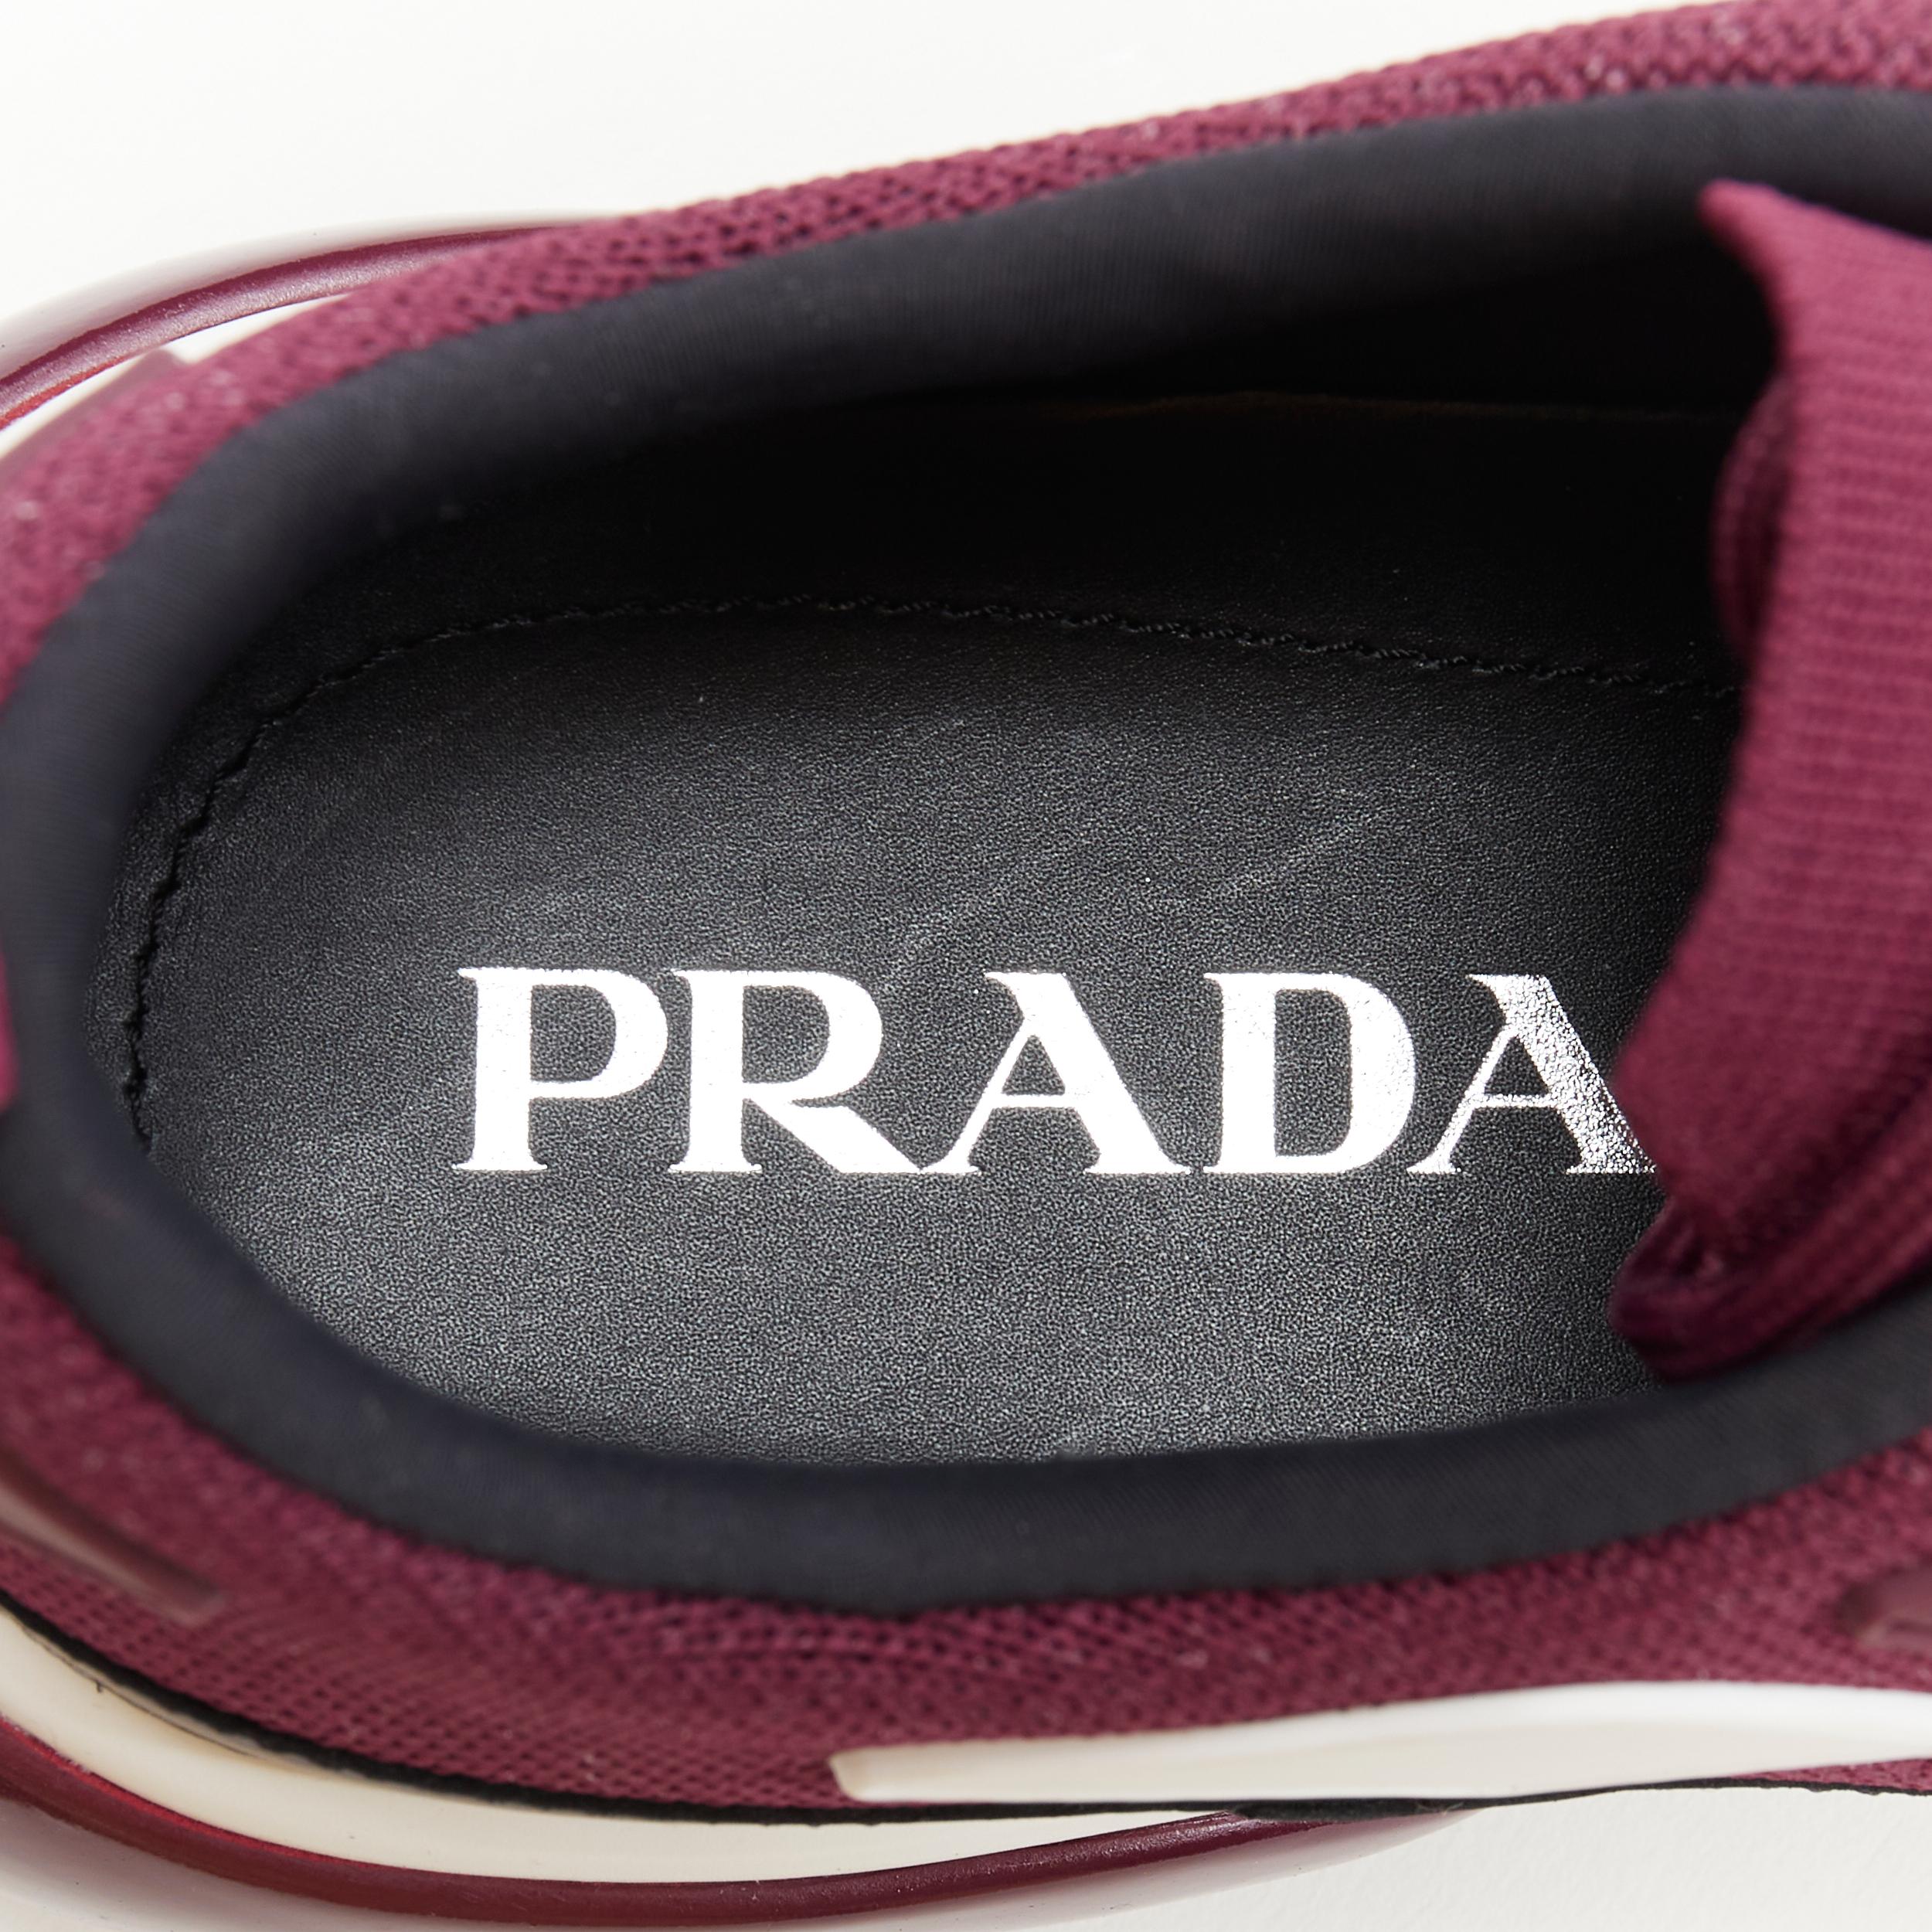 new PRADA 2018 Cloudbust burgundy red rubber logo low top sneaker UK7 US8 EU41 9